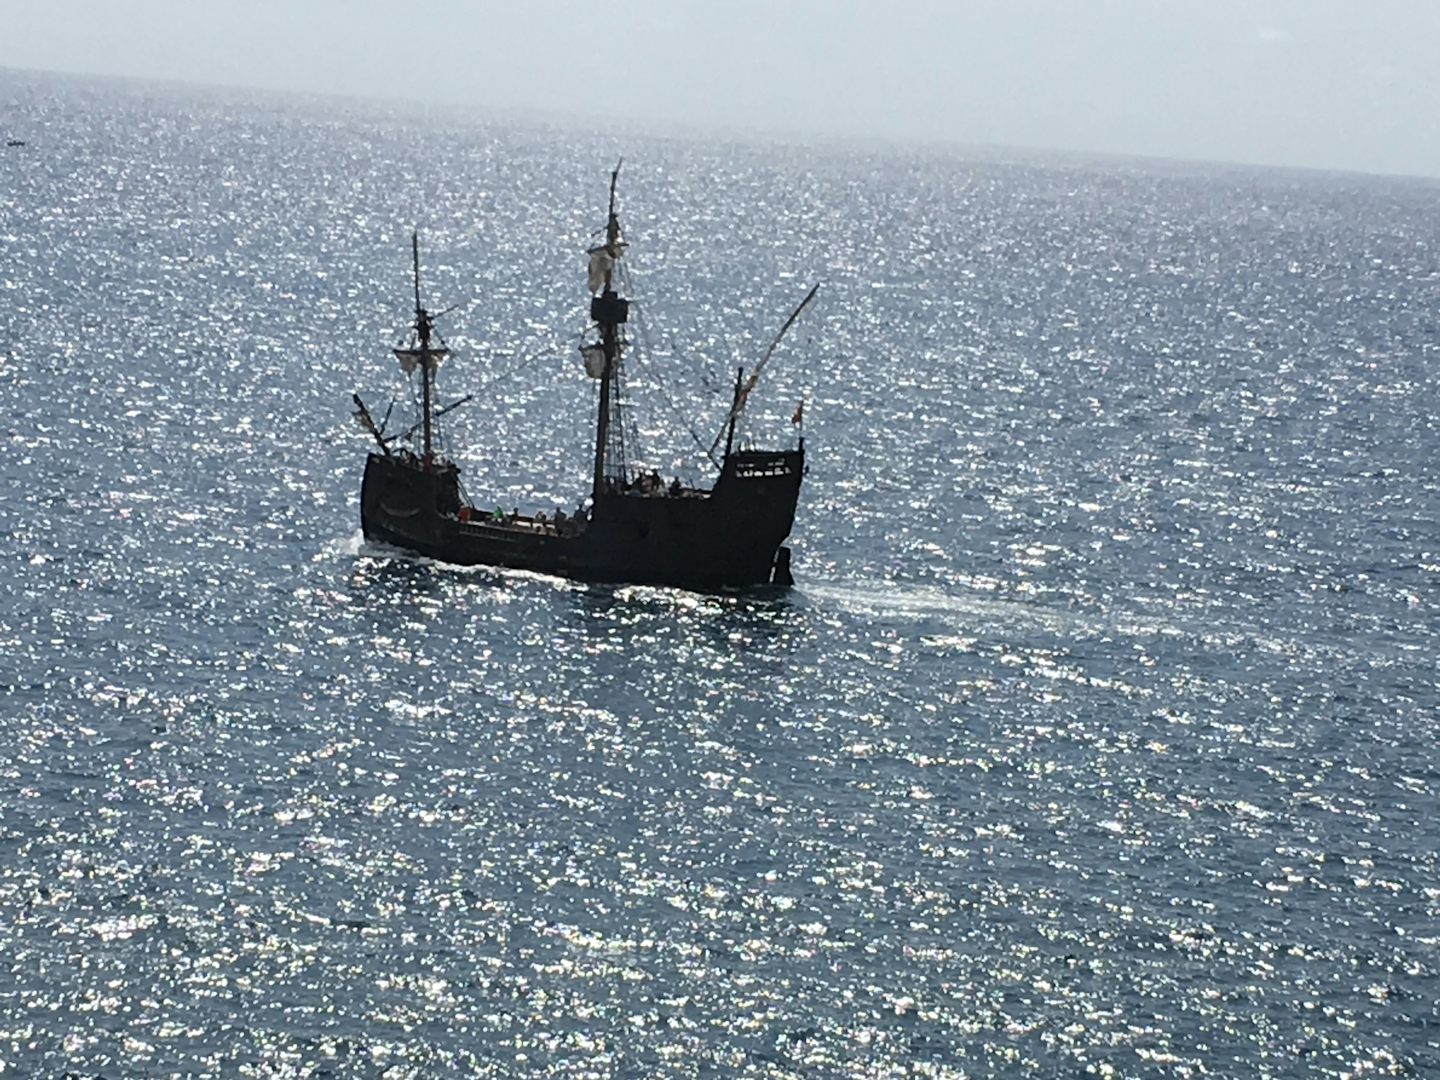 Pirate ship !